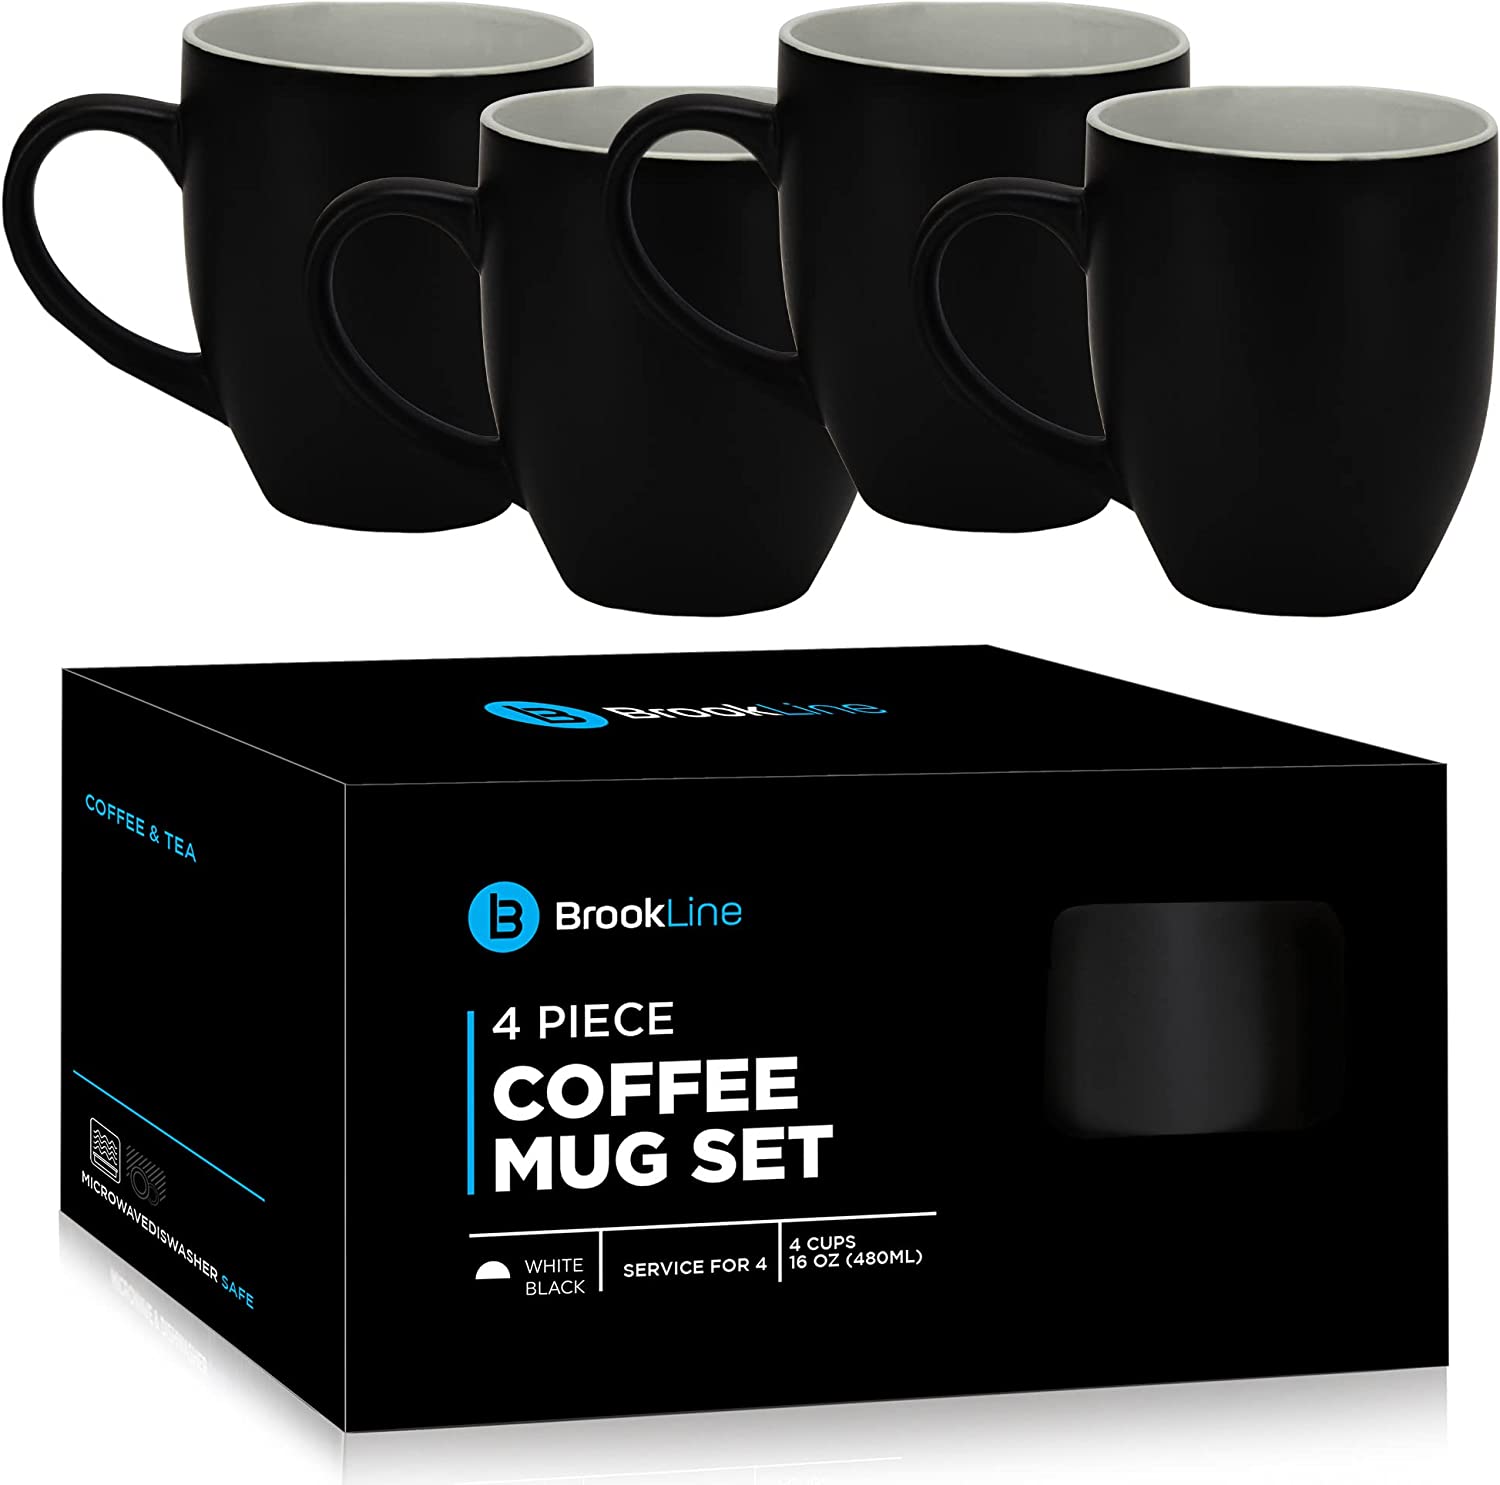 16 oz. Large Ceramic Coffee Mug with Handle, Tea Cup, Novelty Coffee Cup,  Black